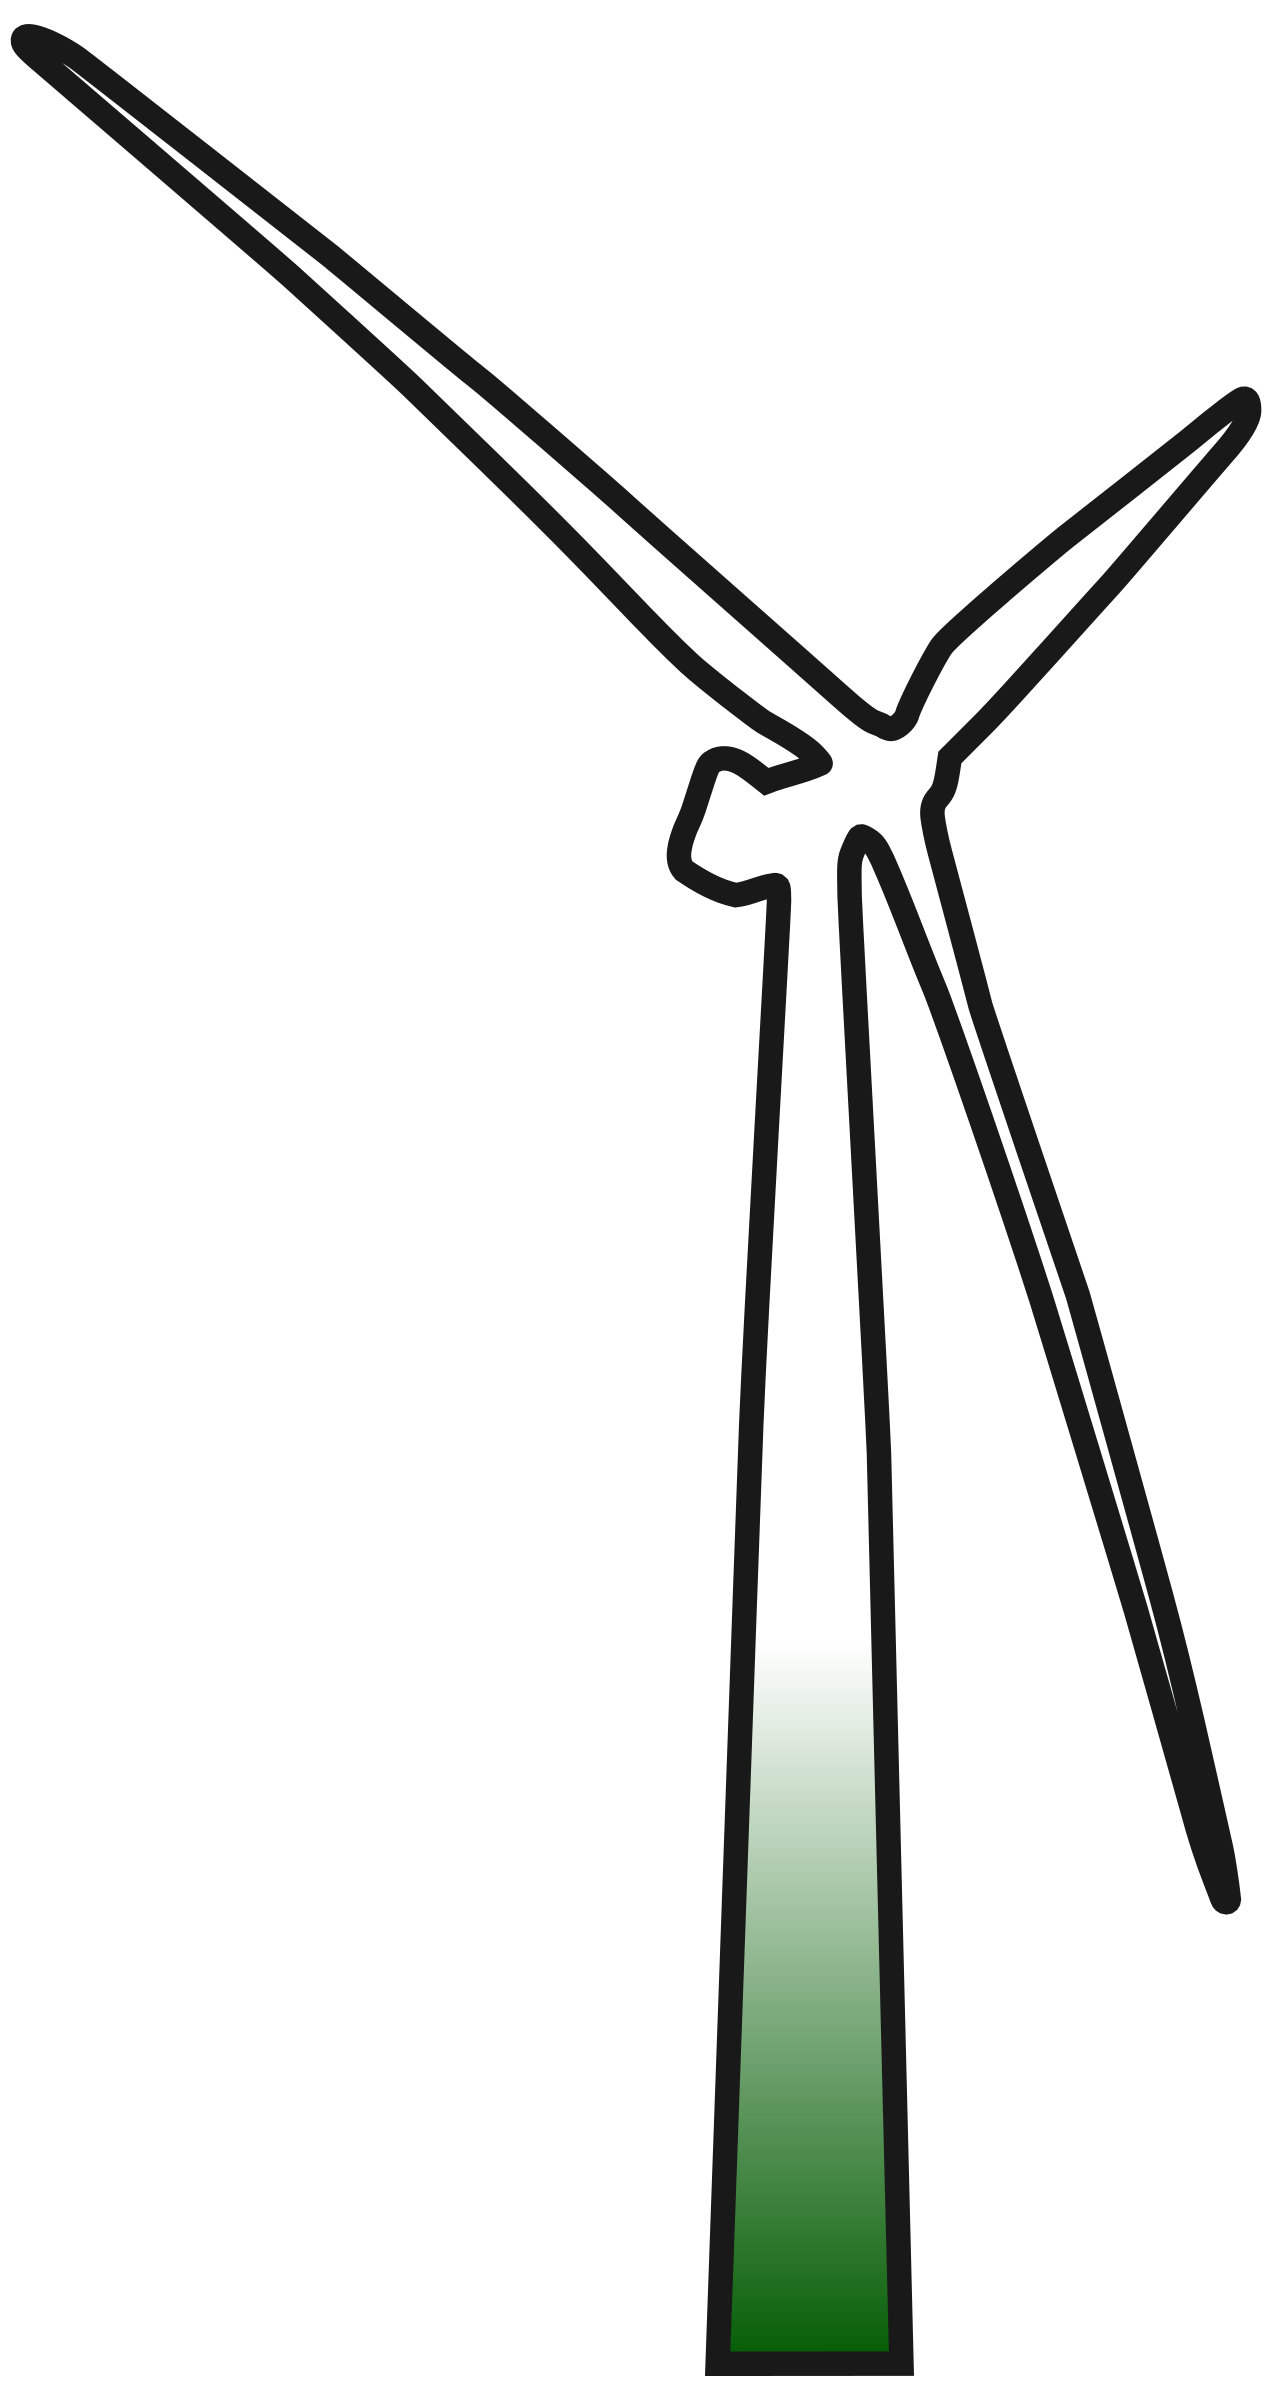 Energy windpower